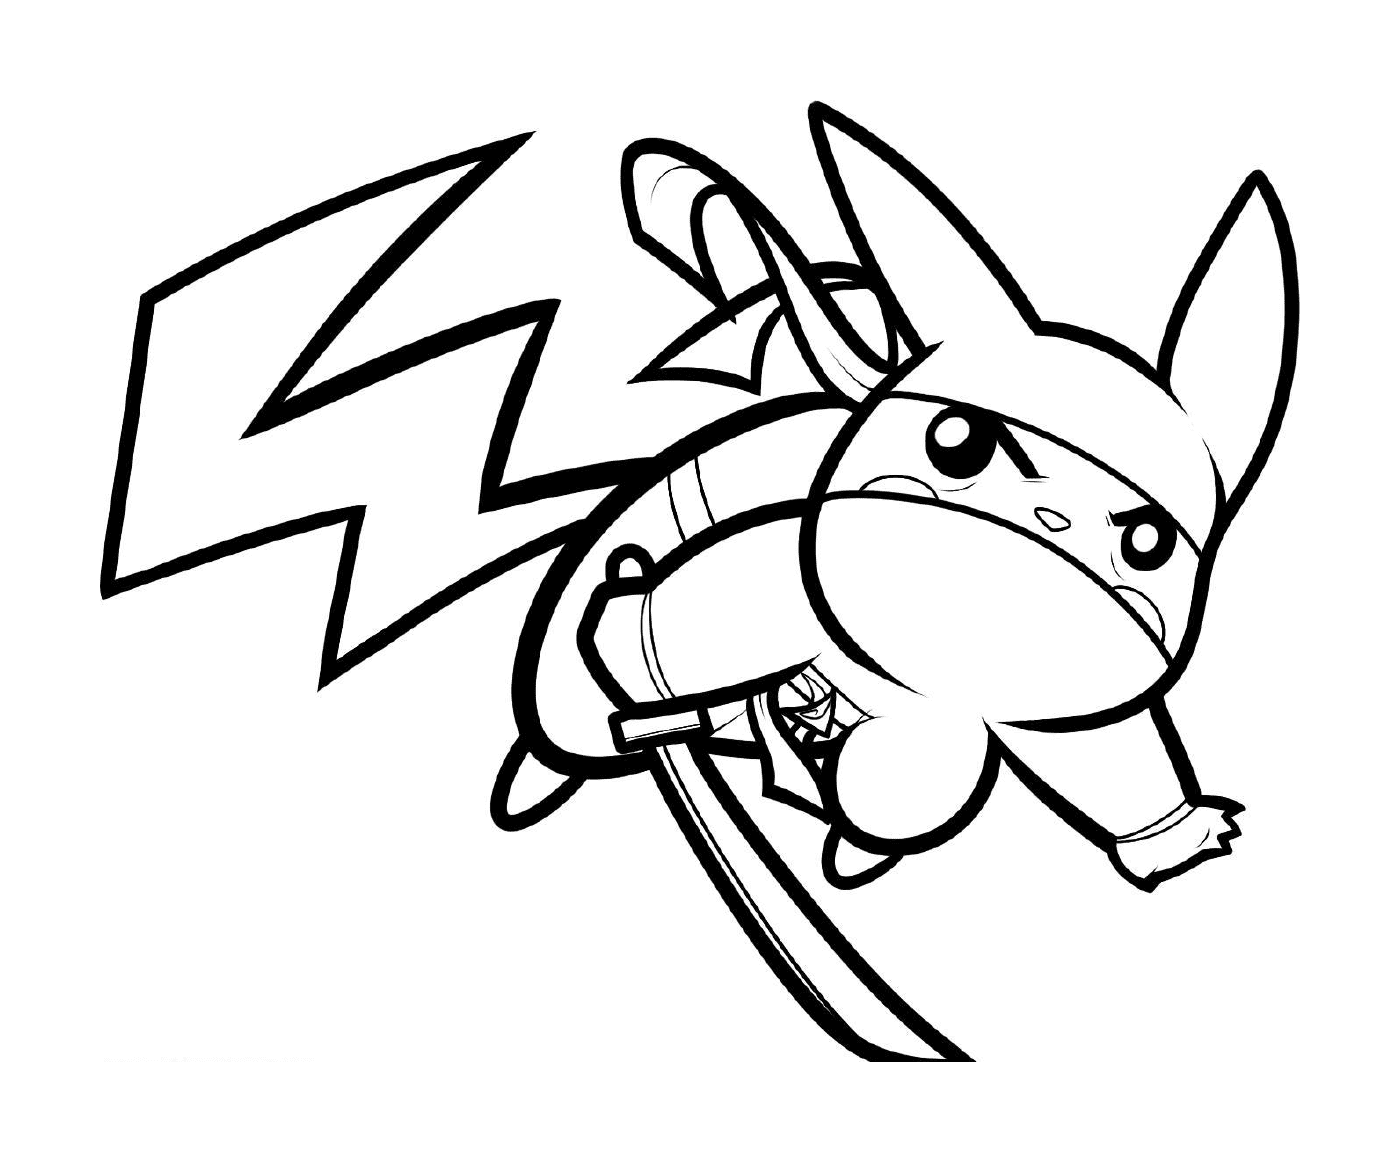  Pikachu, malicious ninja equipped 